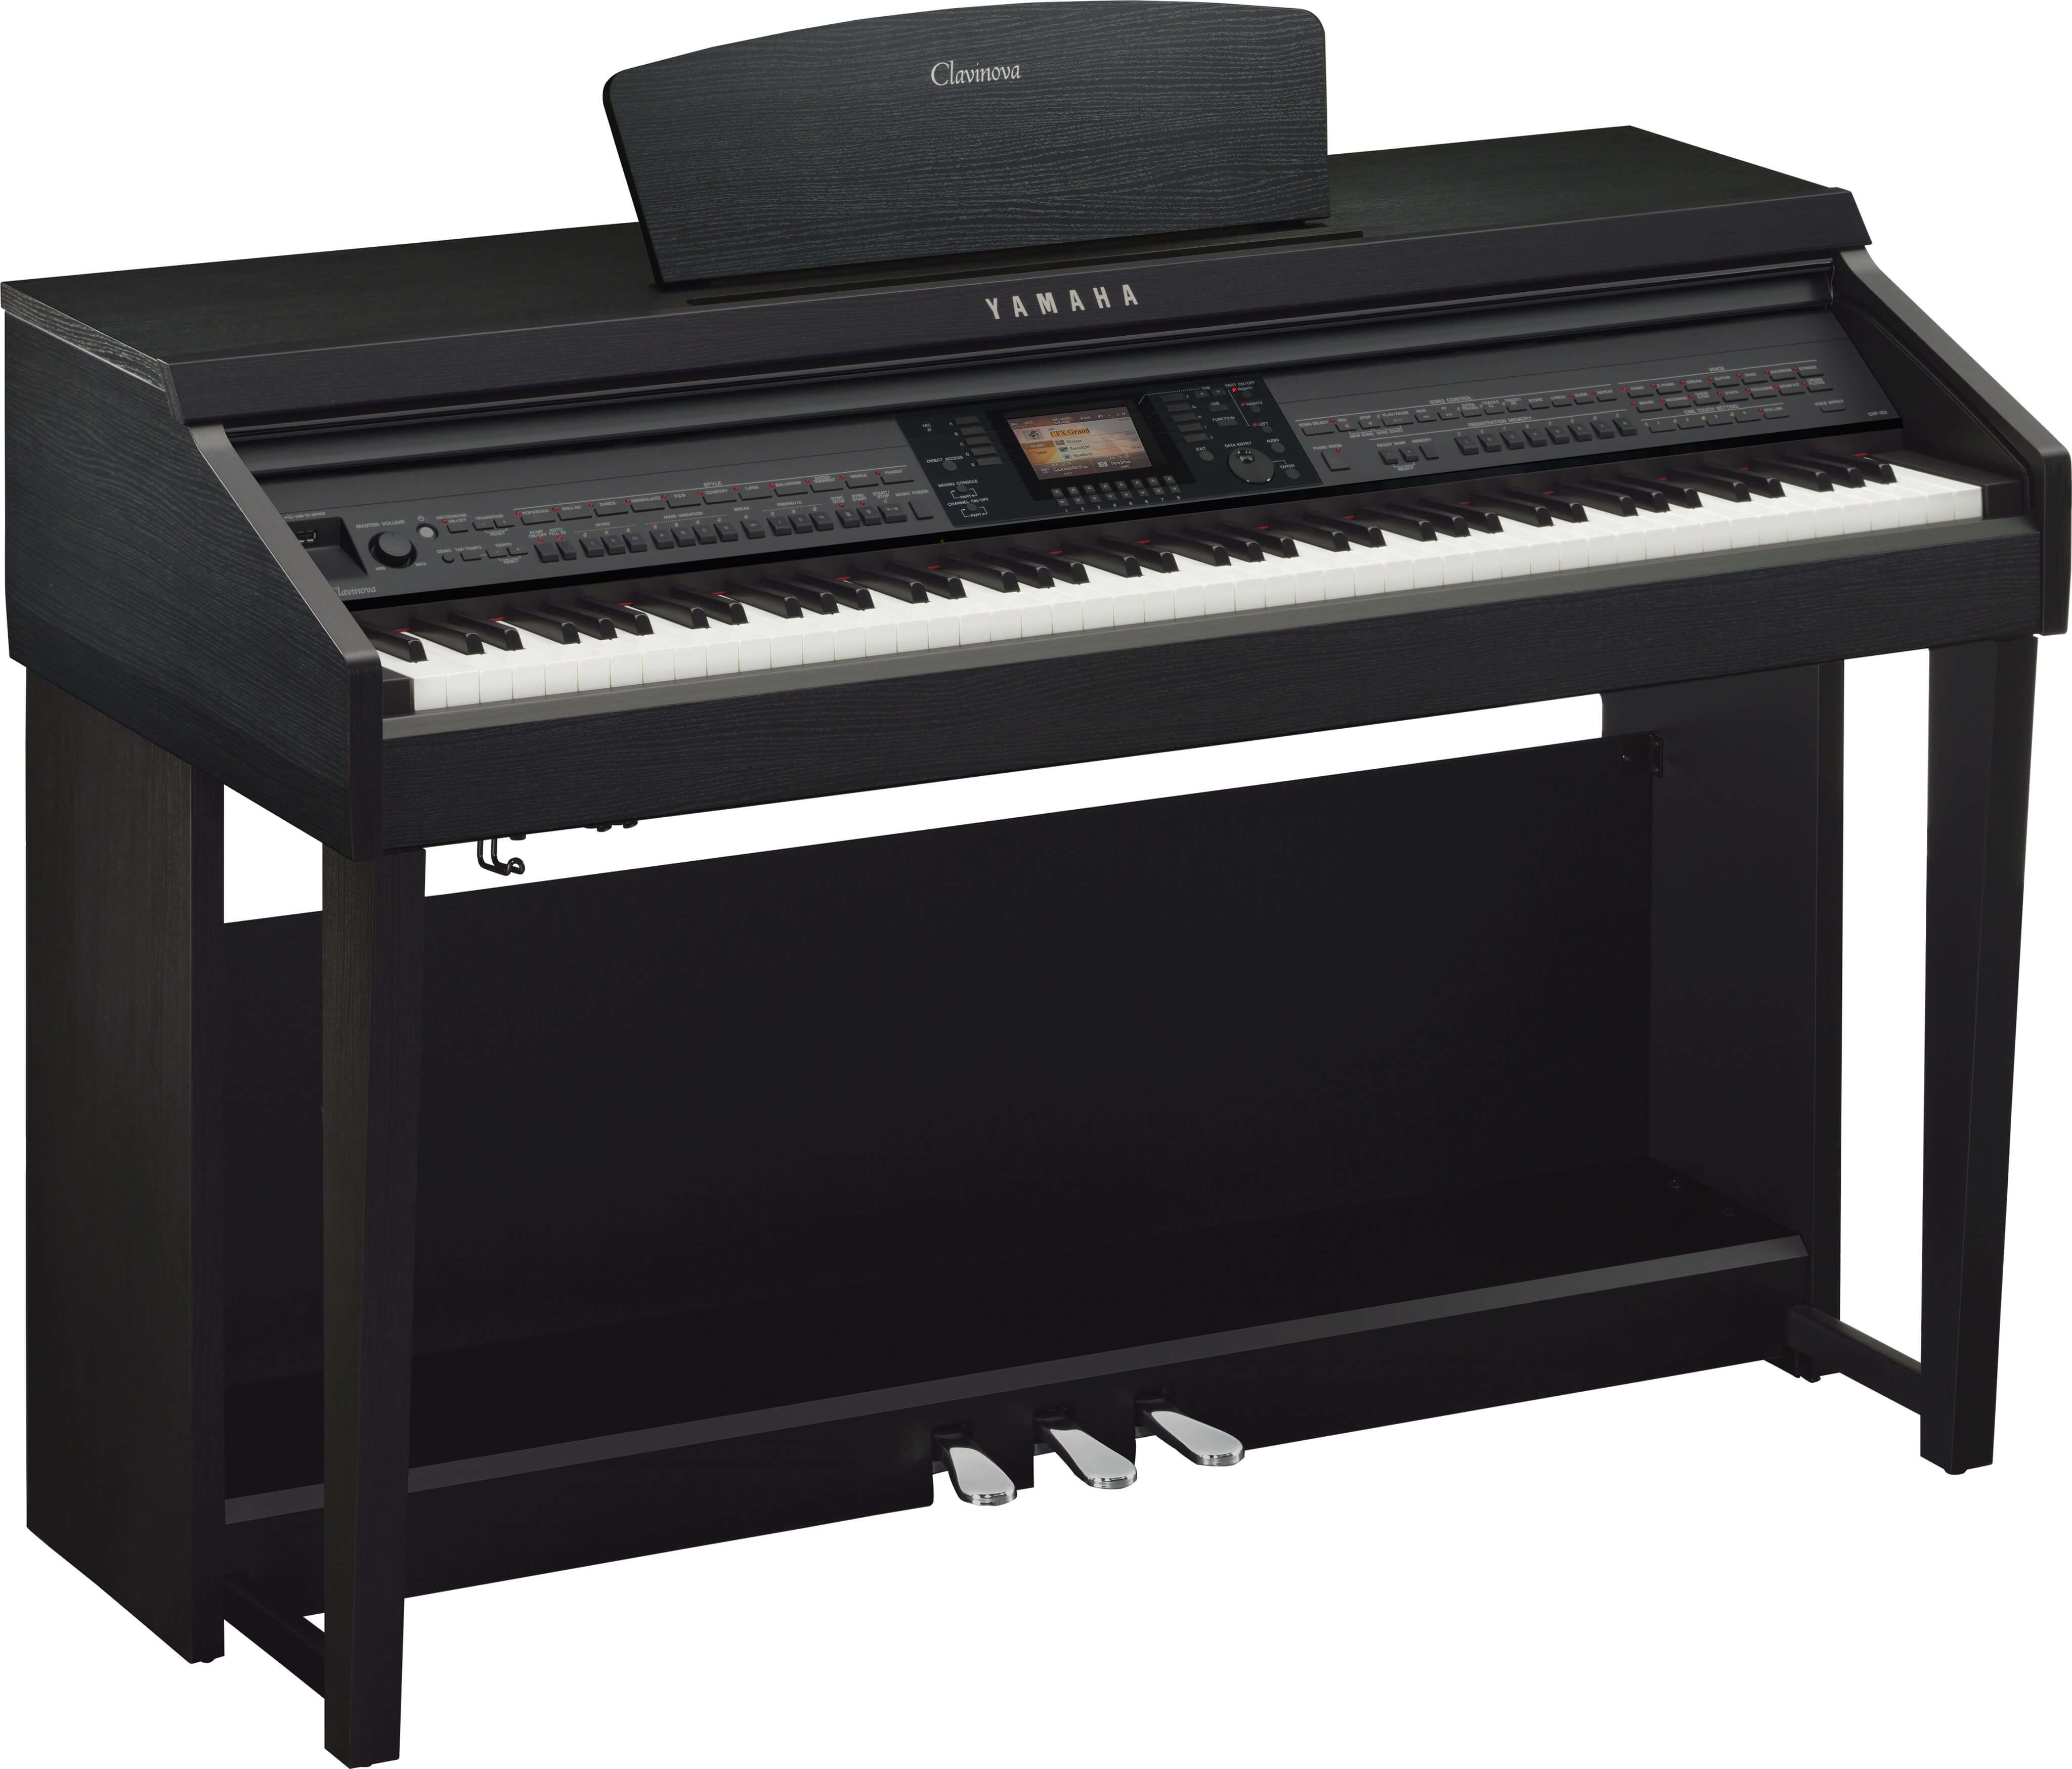 Piano Digital Yamaha CVP-701 Con Banqueta Regulable